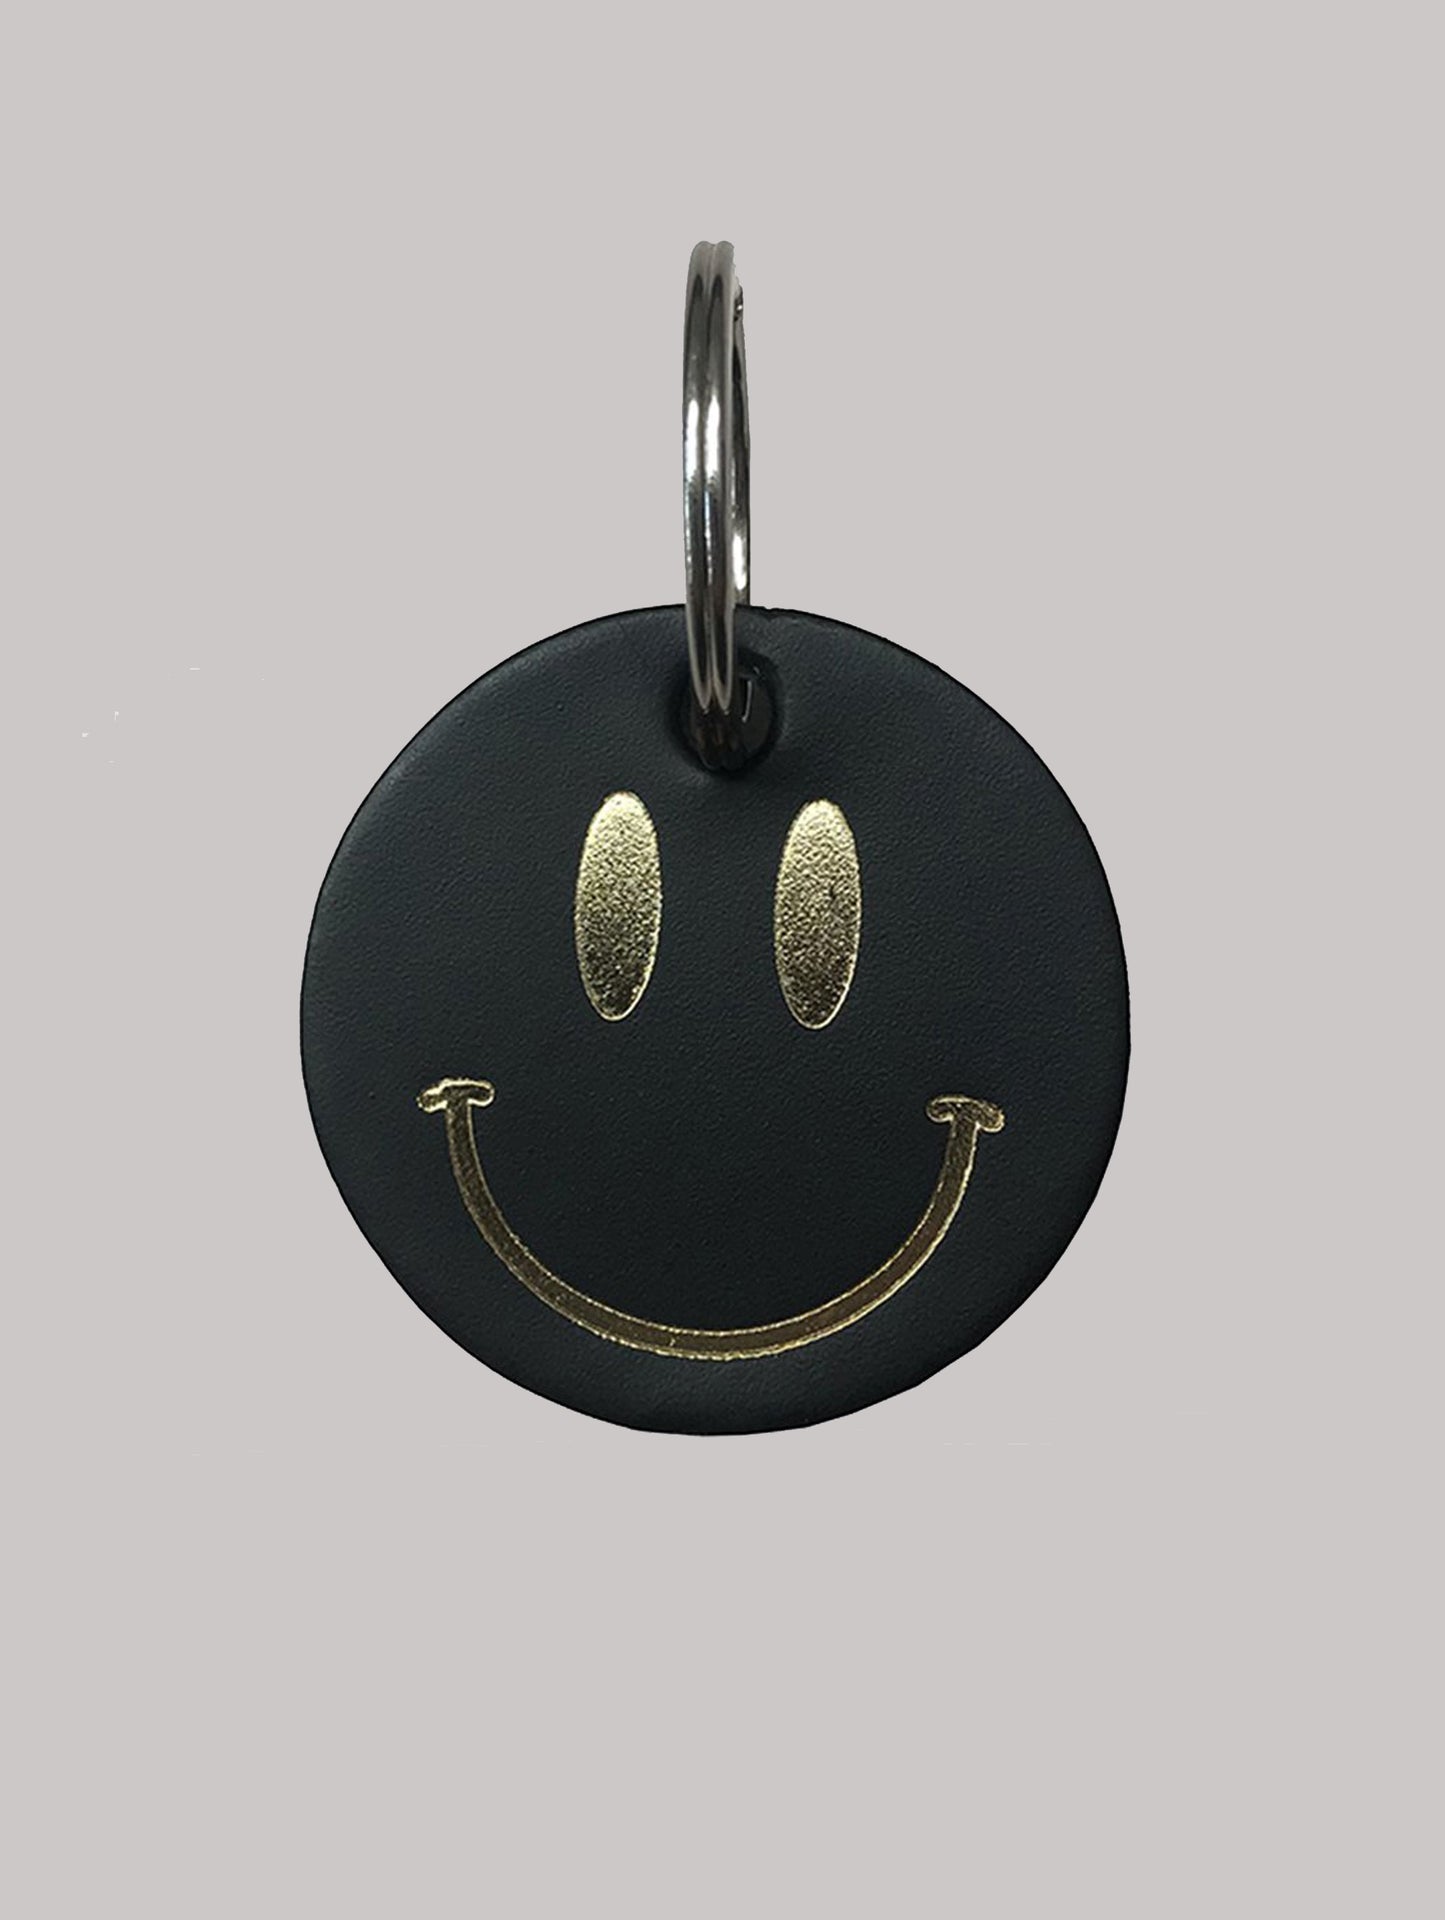 Smiley on dark leather keyring